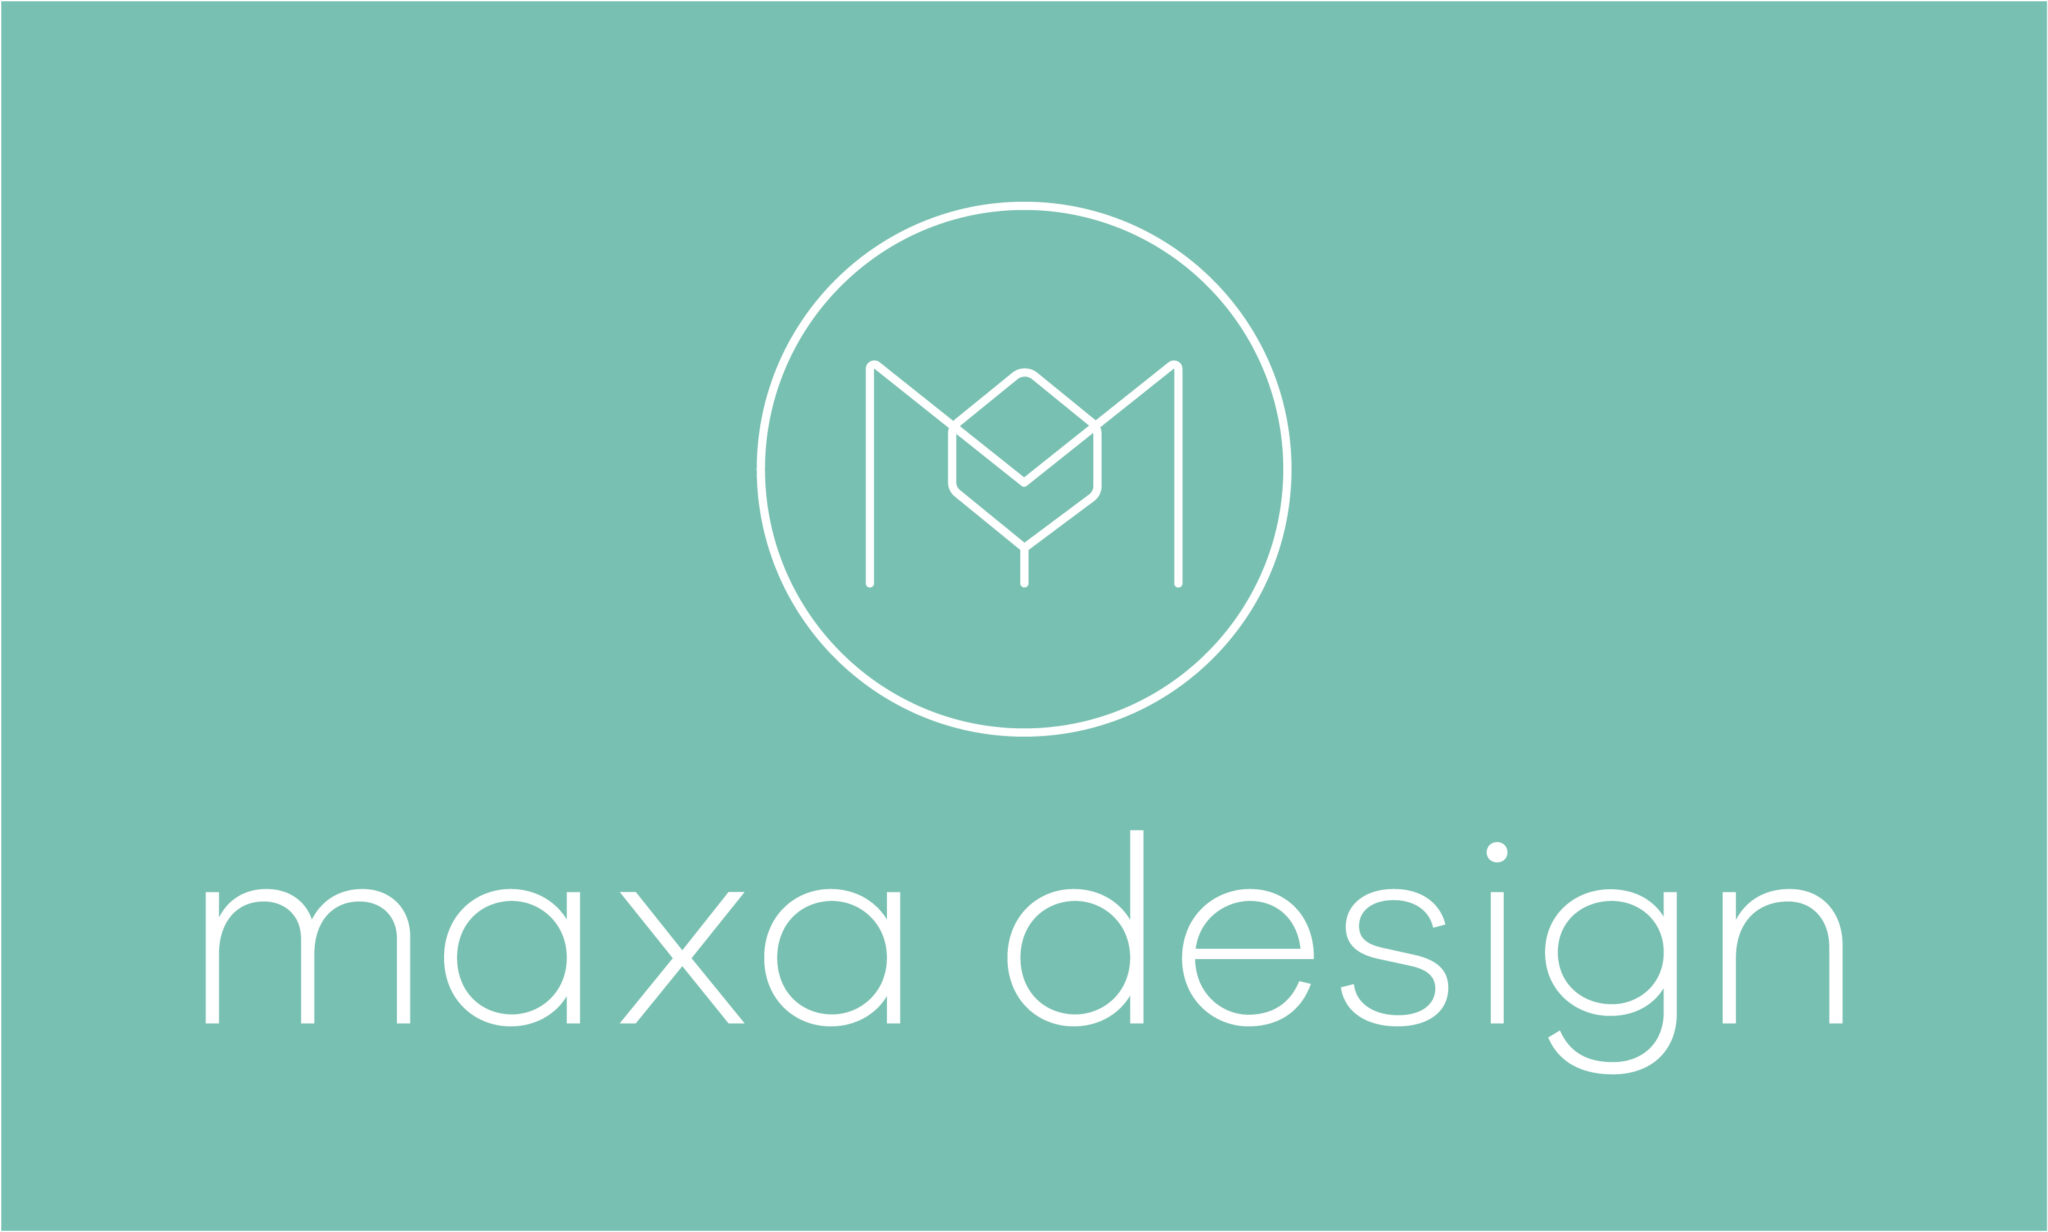 Maxa Design